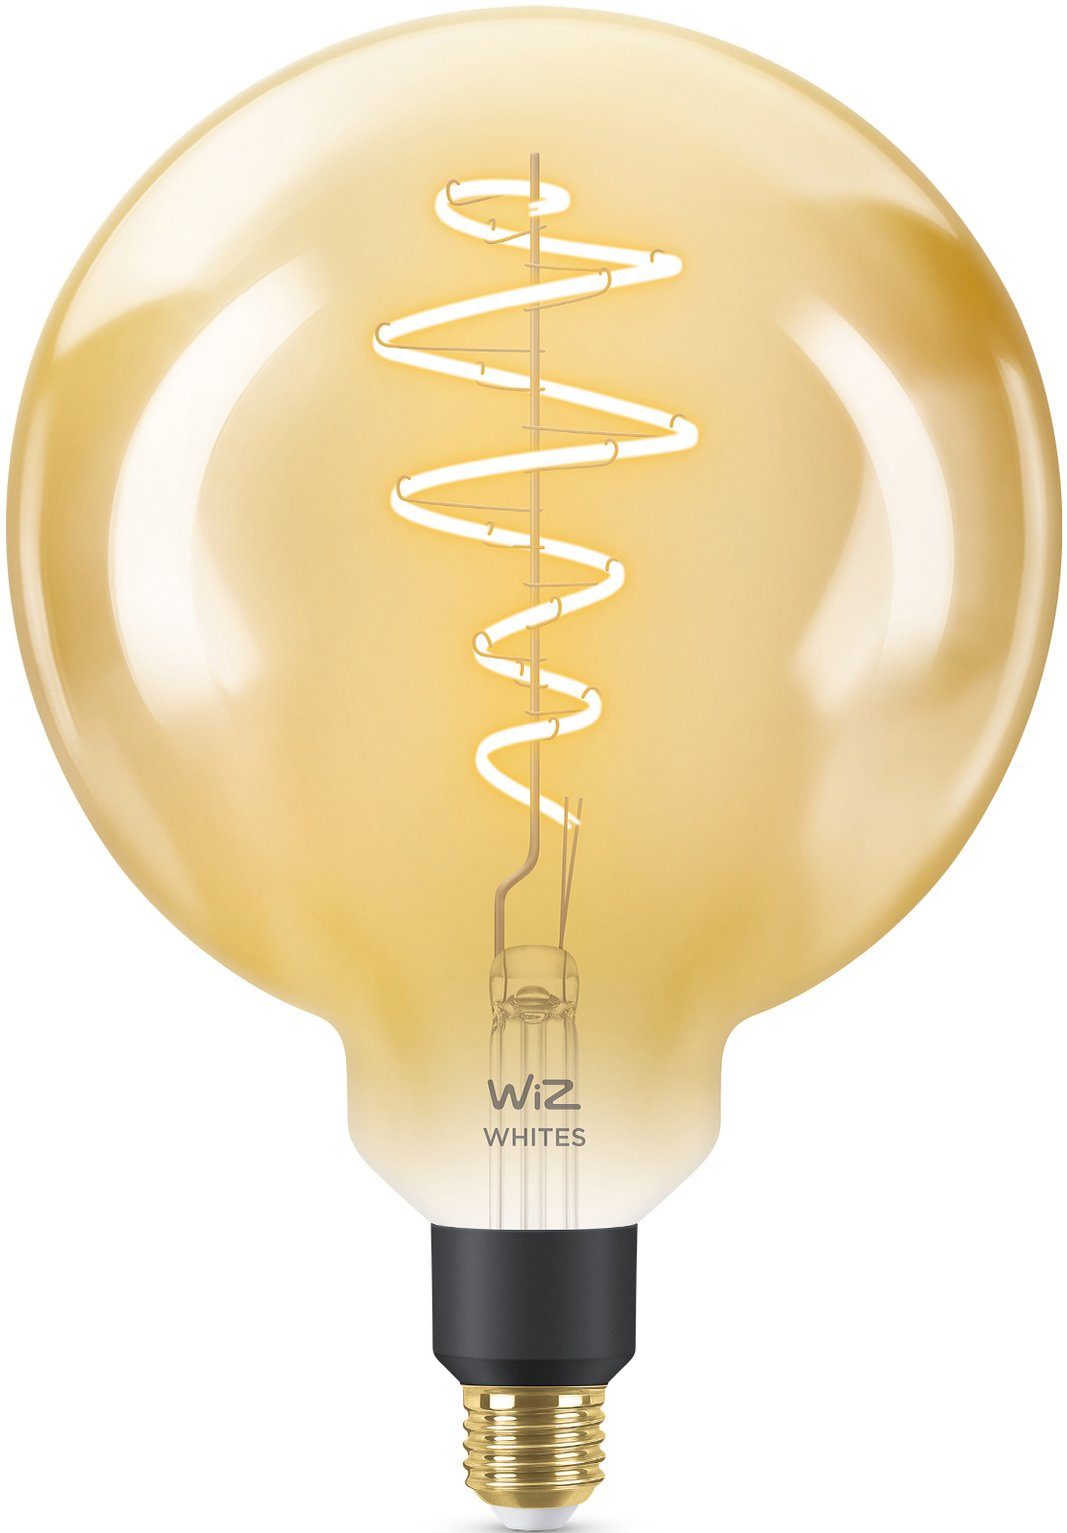 WiZ LED-Filament Filament 40W E27 XL-Globeform G200 Amber Einzelpack, E27, 1 St., Warmweiß, Wiz Tunable White Filament LED Lampen für klassisches Vintage-Design